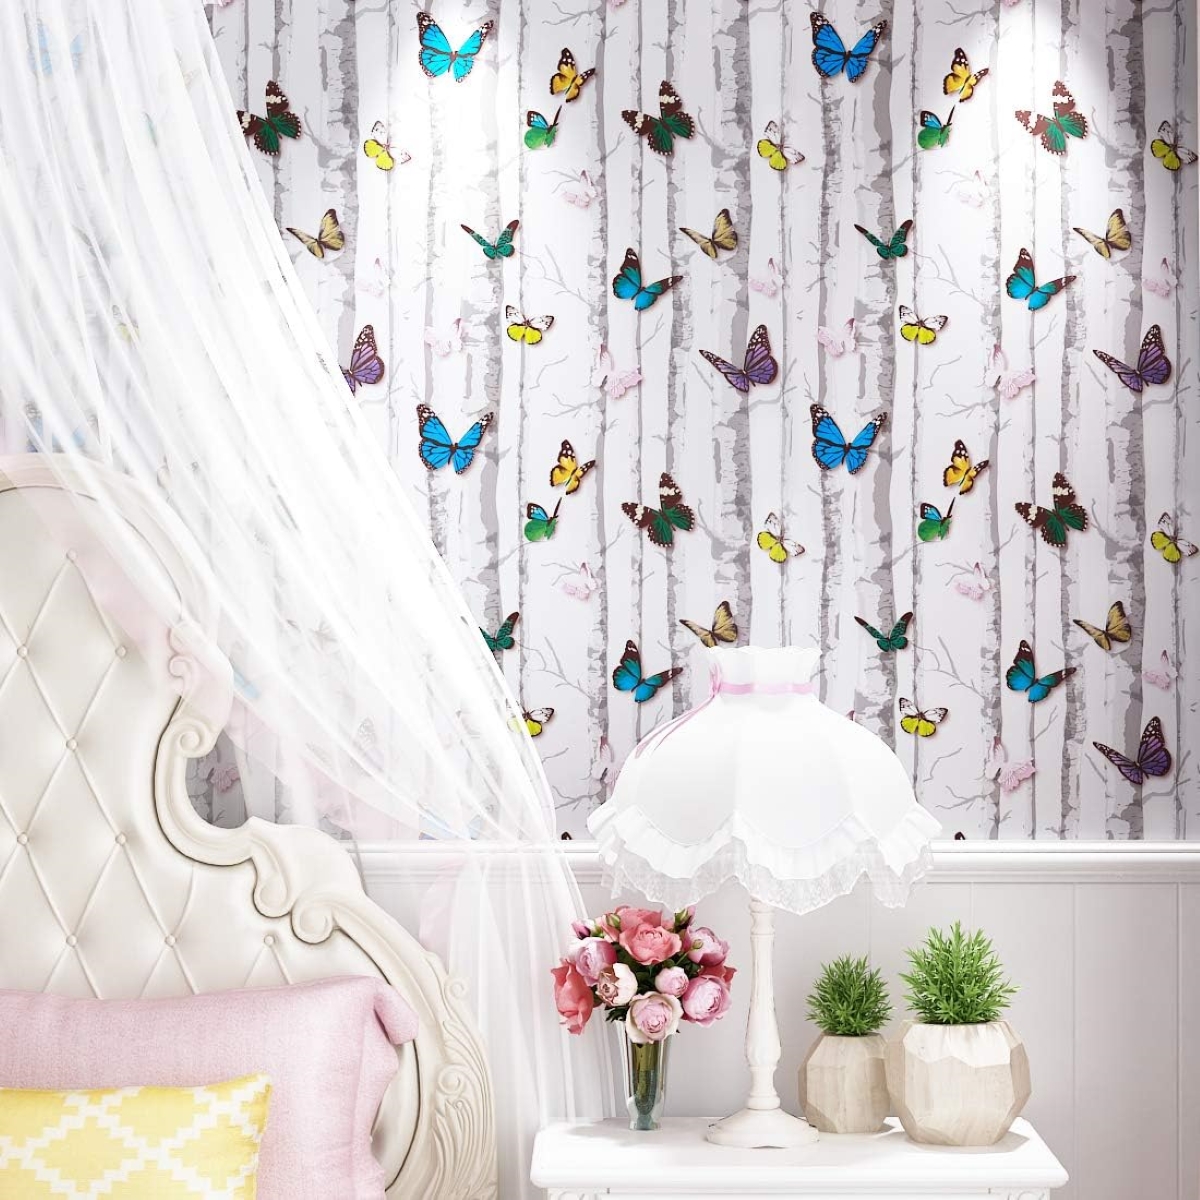 Butterfly wallpaper in child's bedroom.